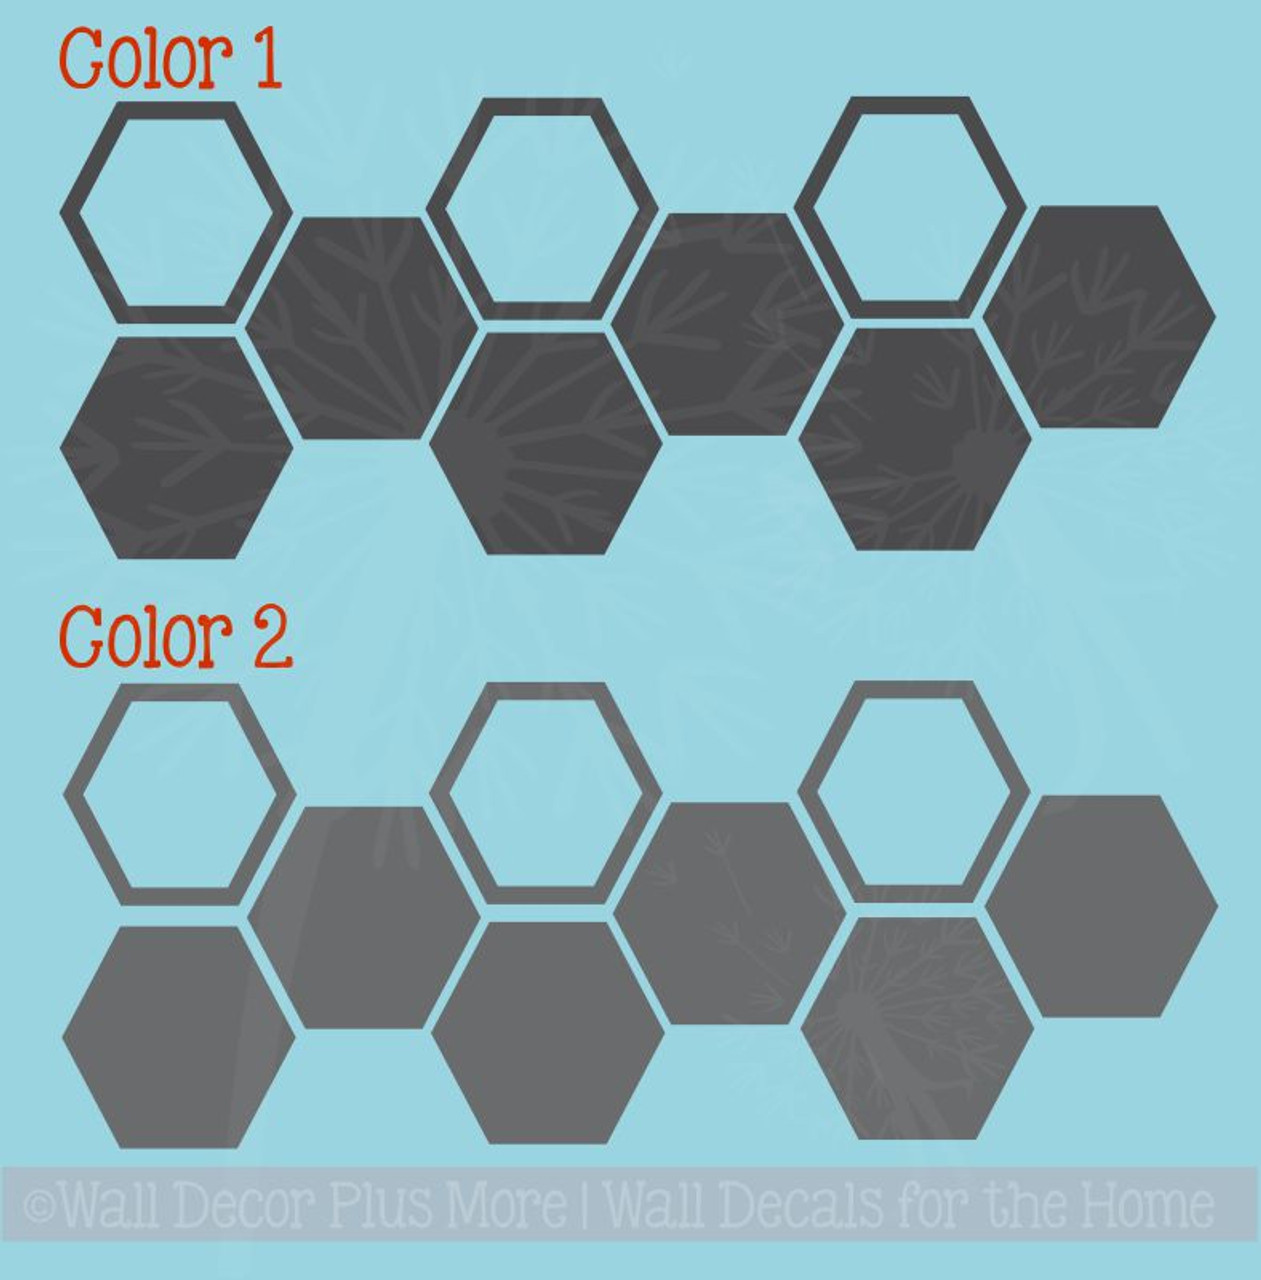 Honeycomb Wall Decals Hexagon Vinyl Wall Decals Geometric Wall Decals